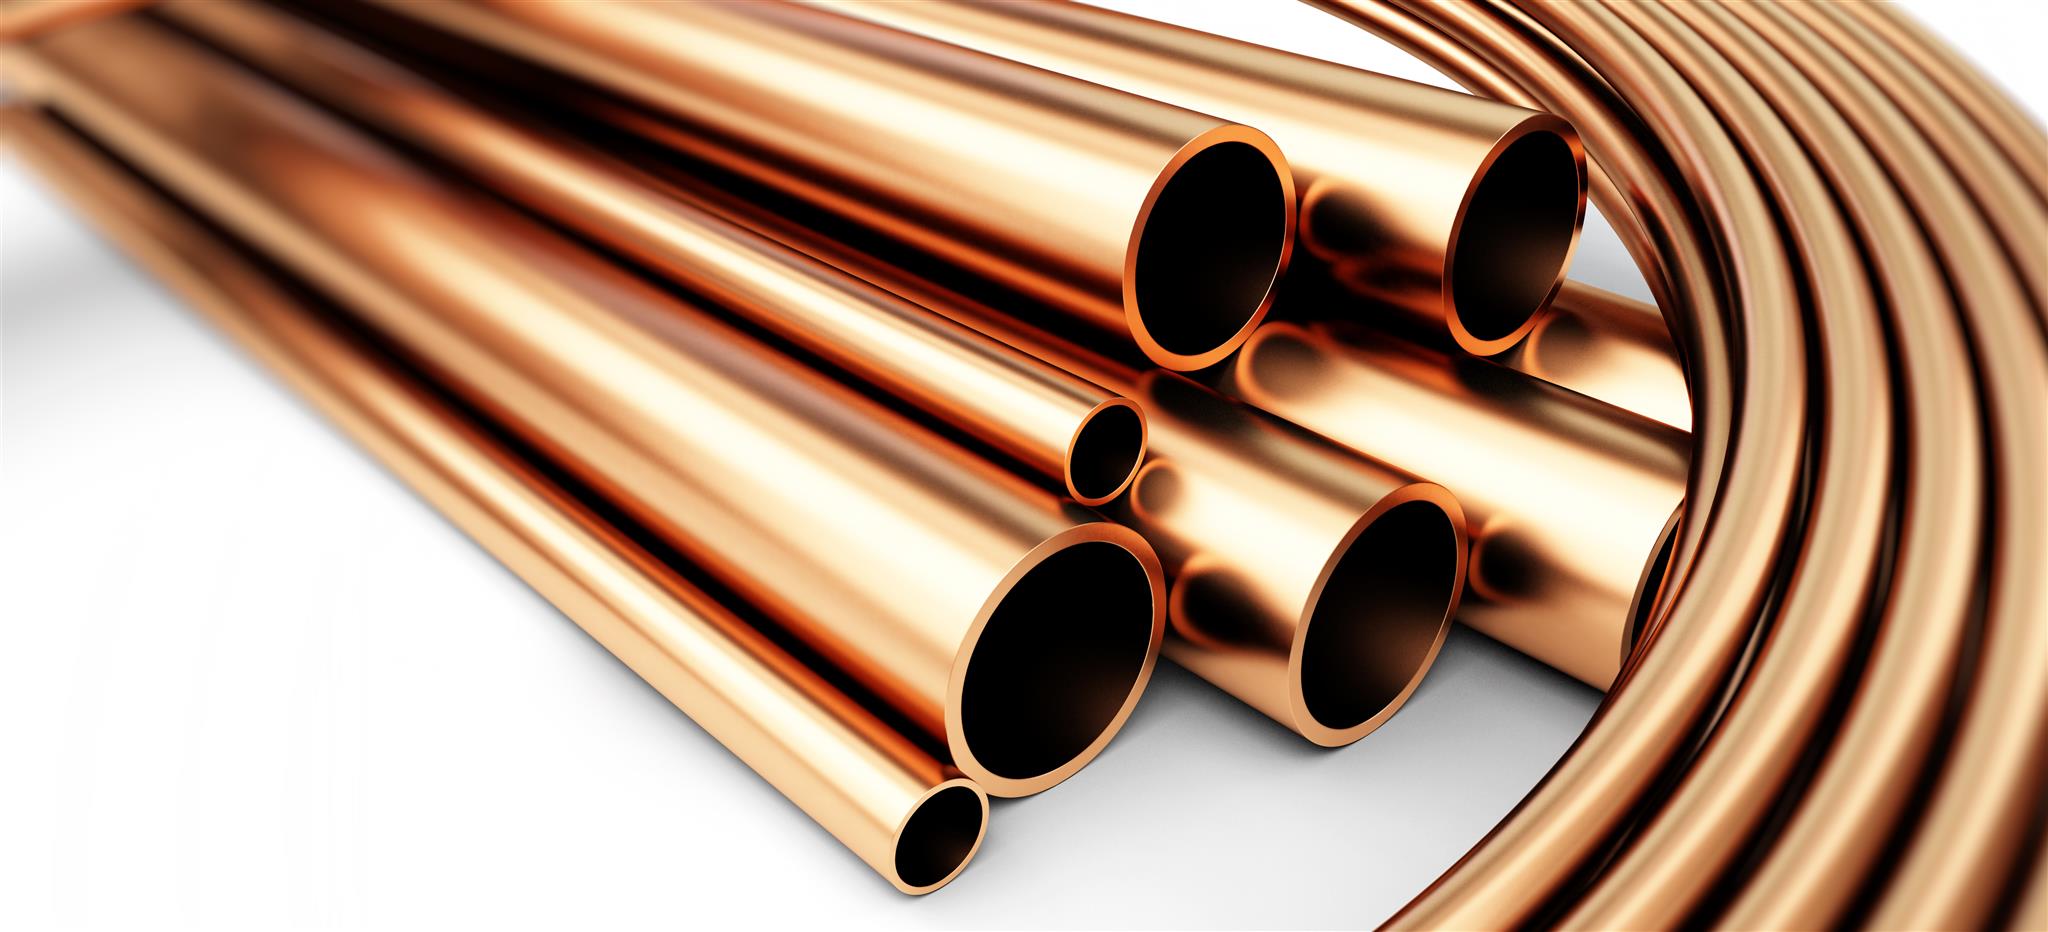 Copper Pipe Manufacturer in Ahmedabad - Republic Metals